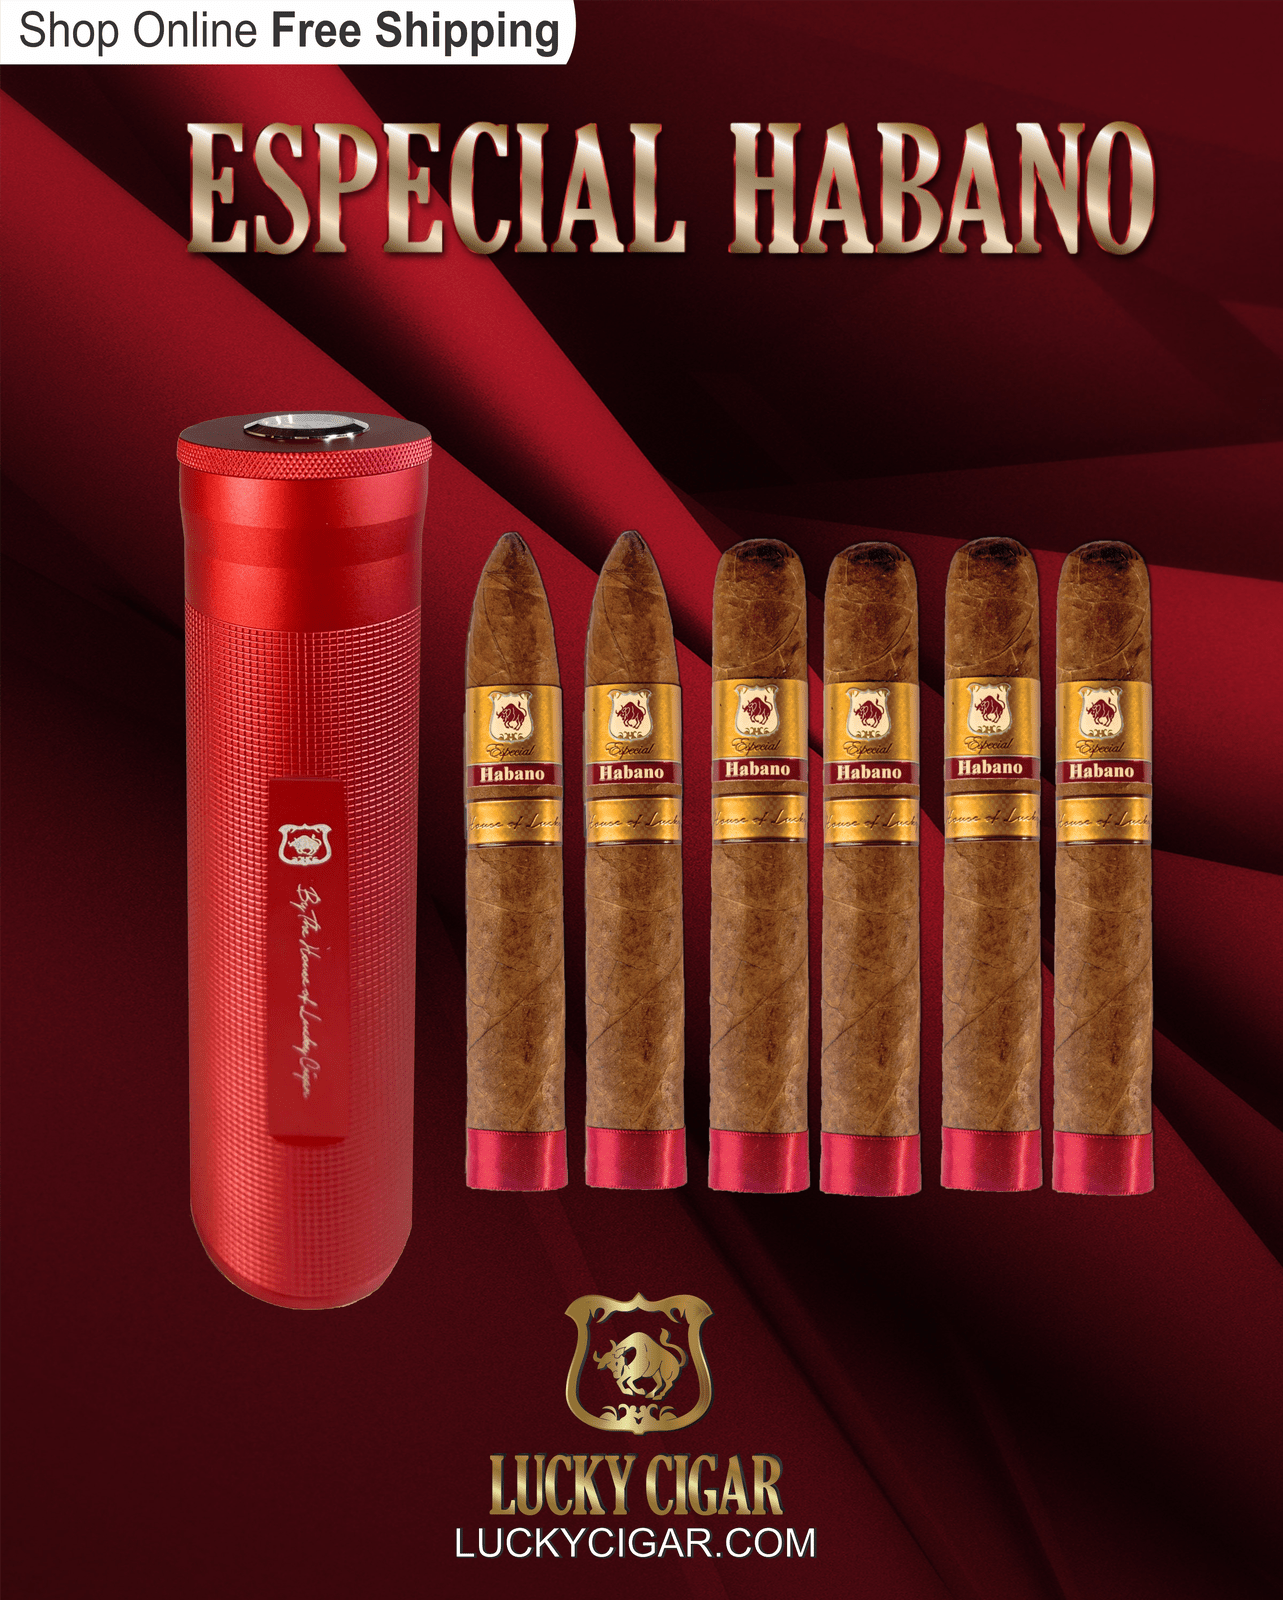 Habano Cigars: Especial Habano by Lucky Cigar: Set of 6 Cigars 4 Toro, 2 Torpedo with Humidor